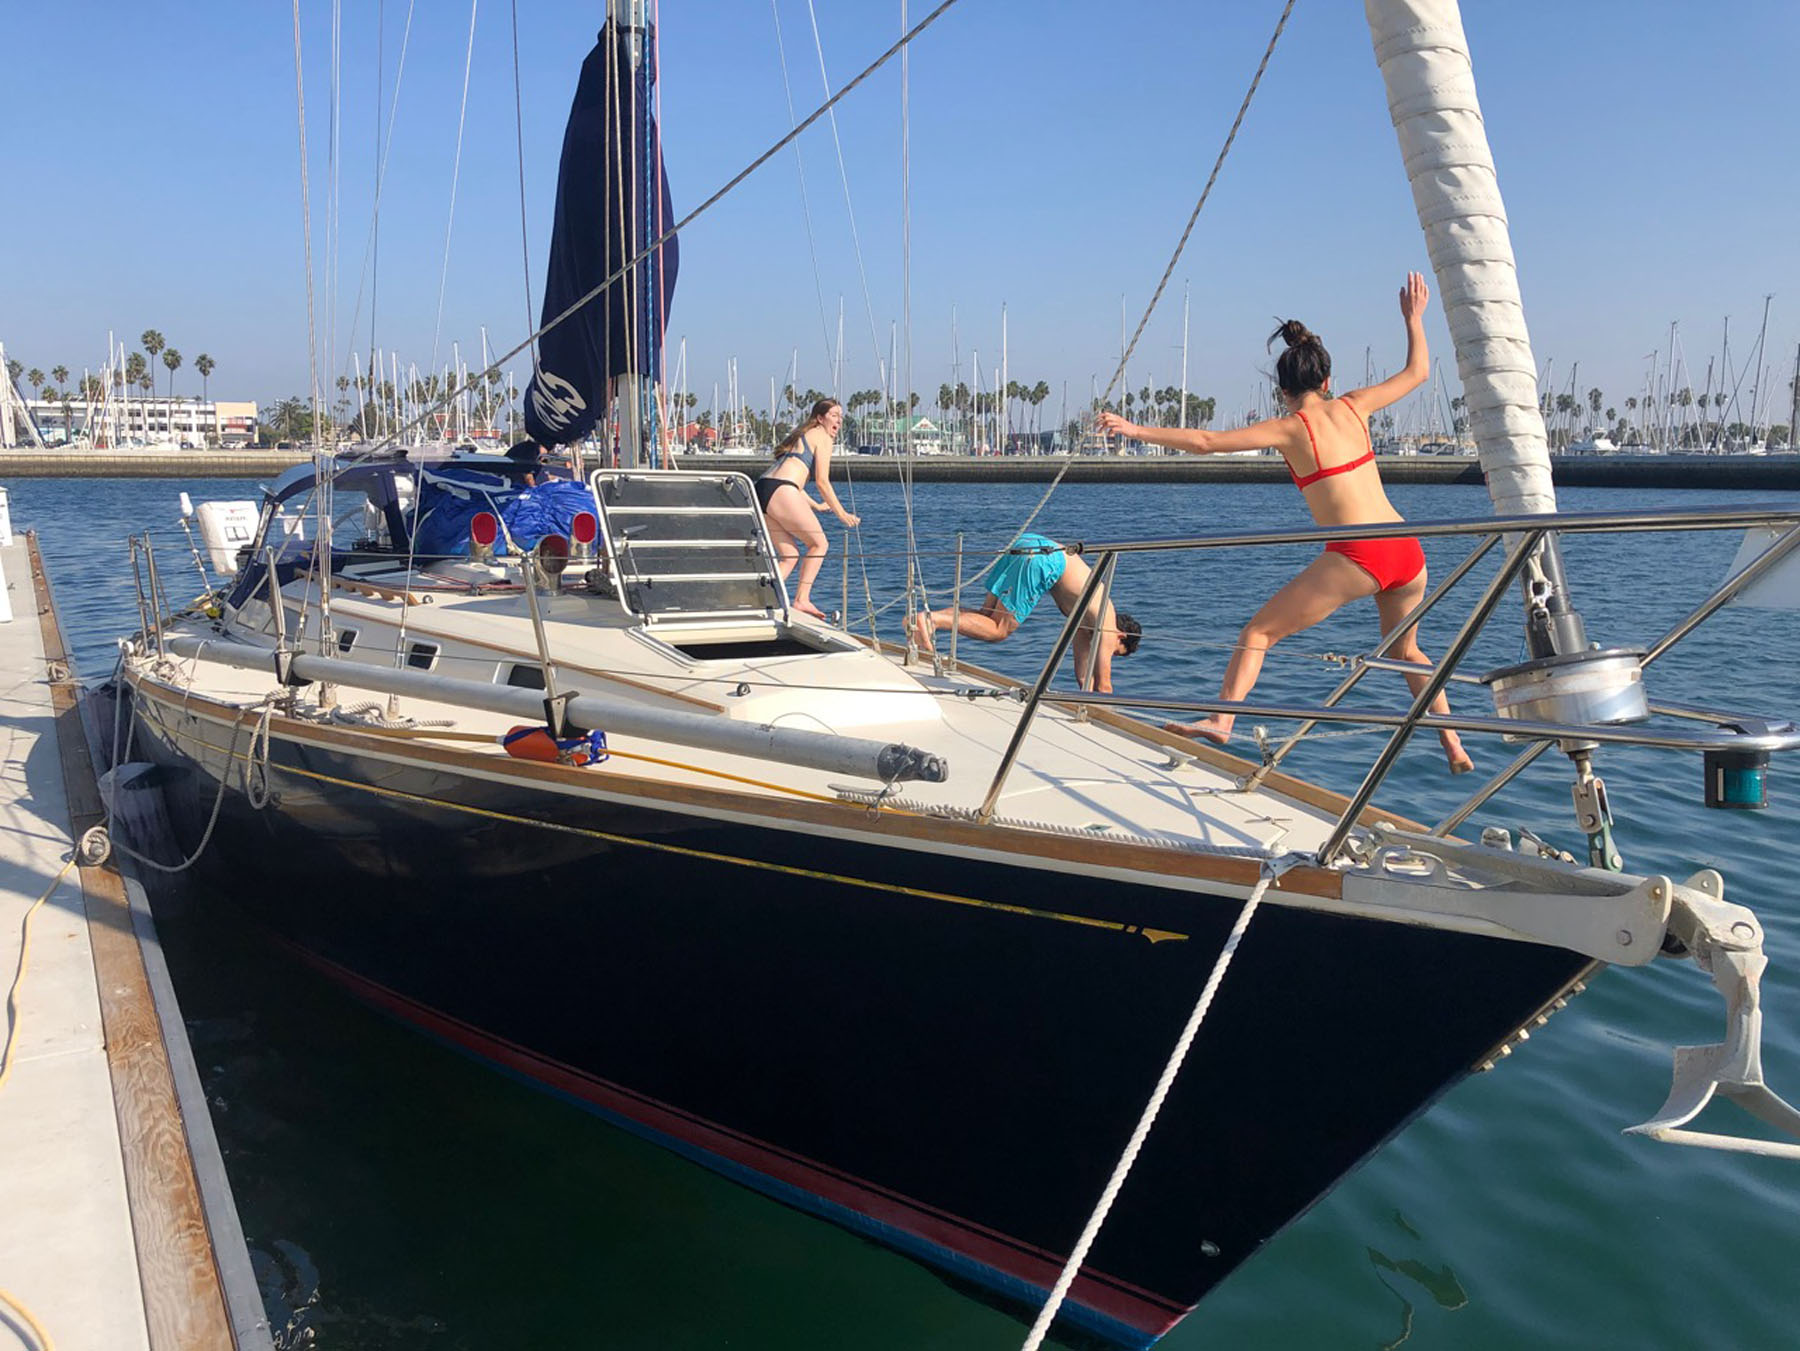 Long Beach Yacht Club docks